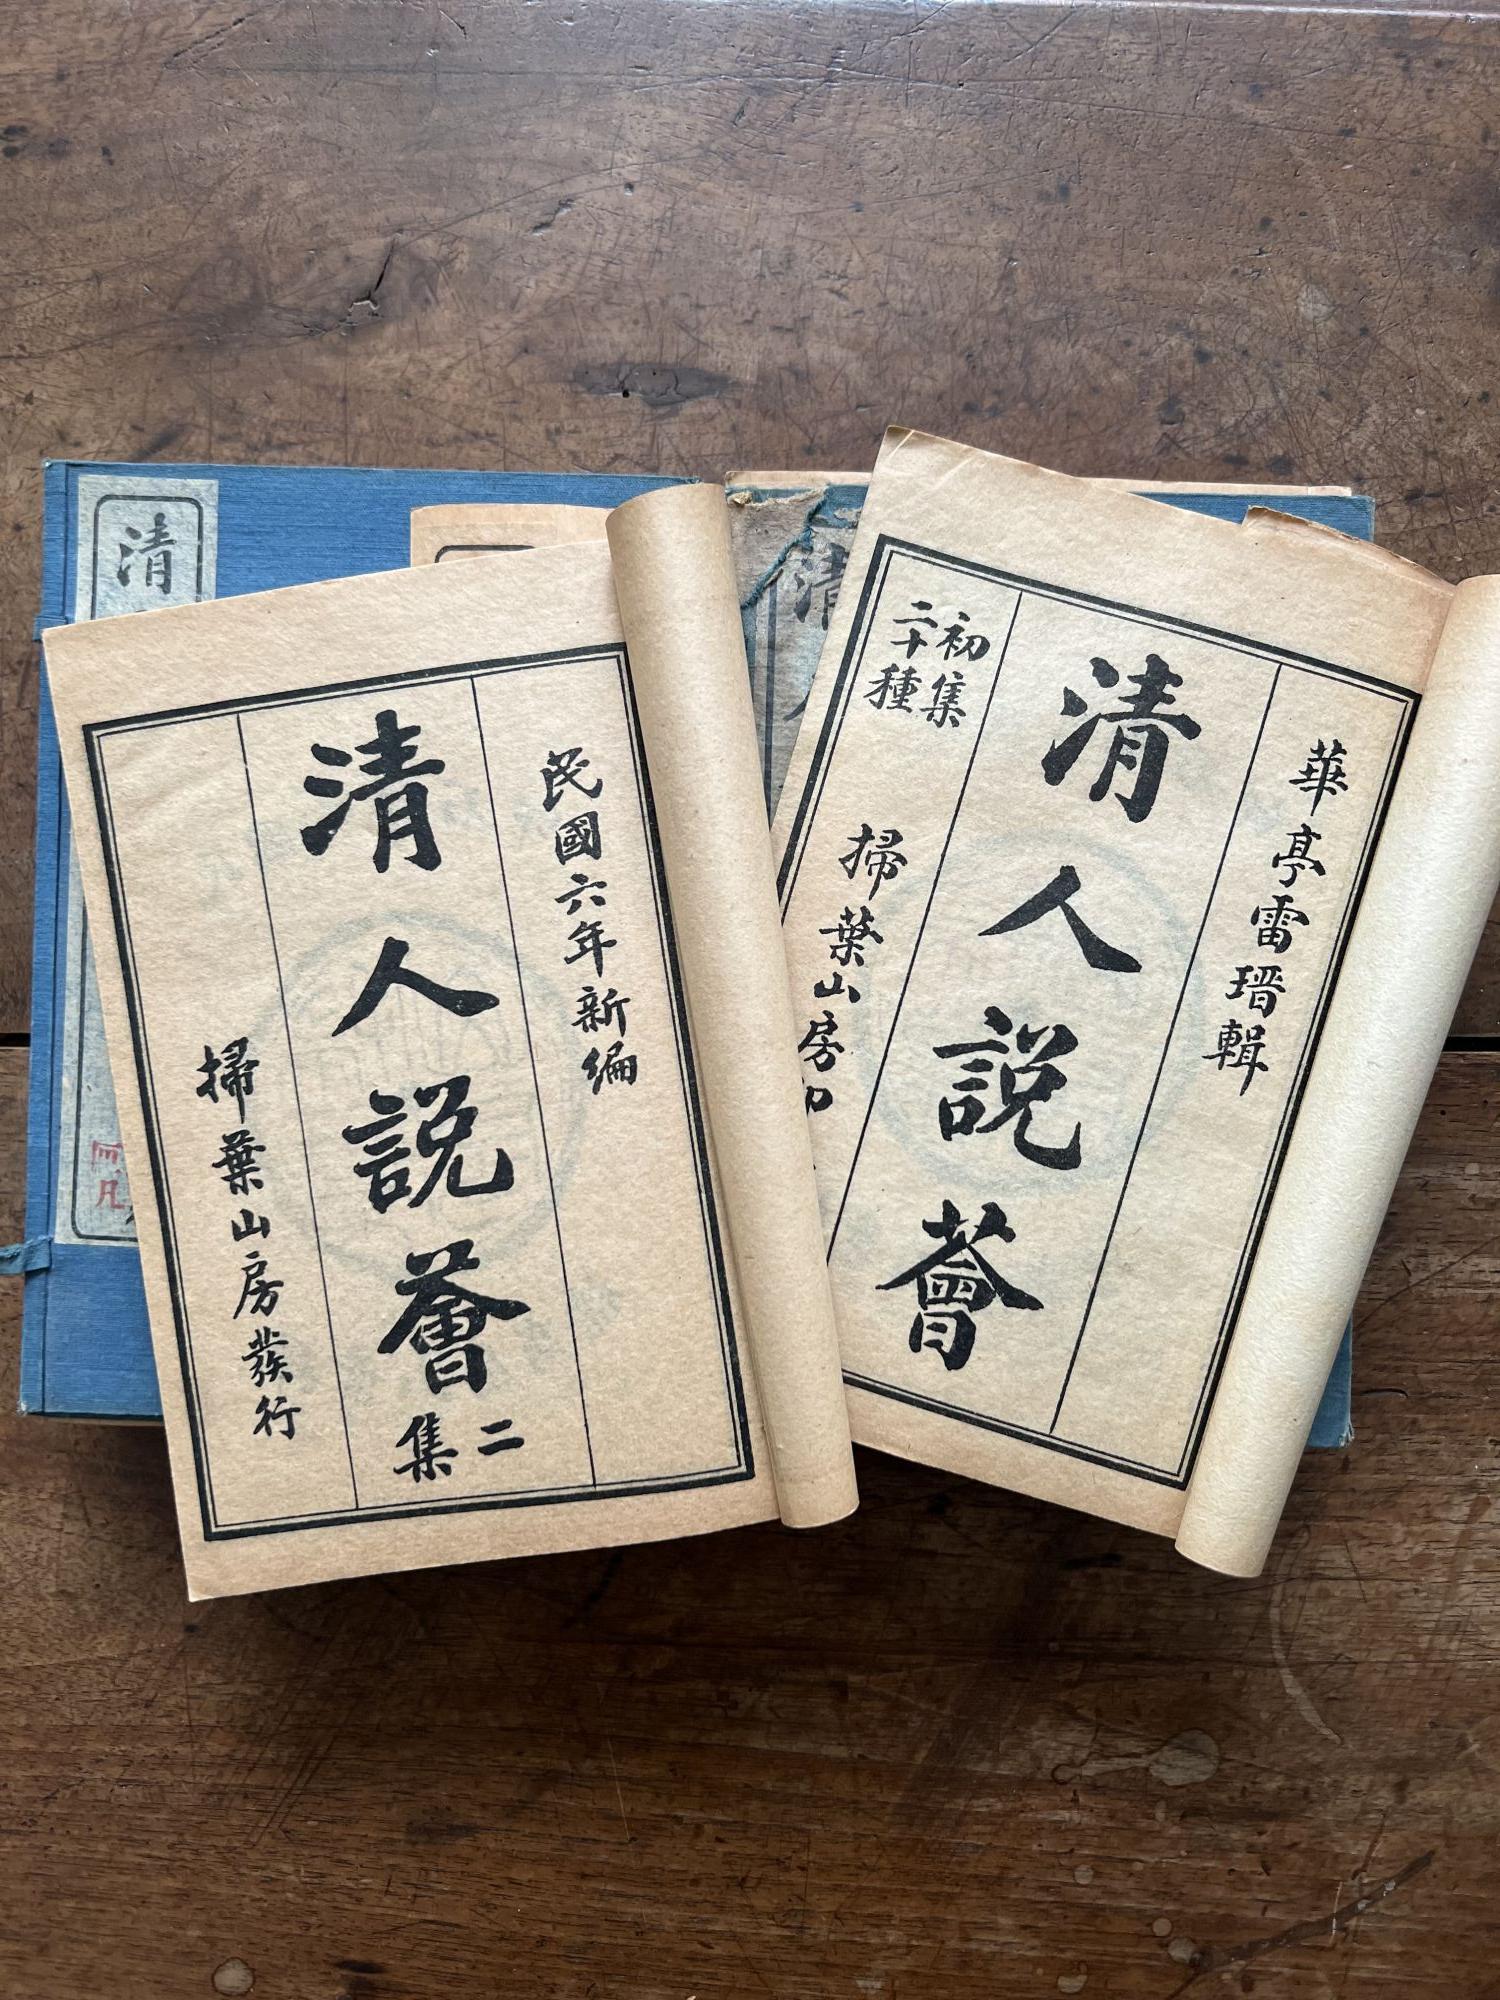 Qing ren shuo hui chu ji 清人說薈初集 Collection of Stories by Qing Authors,  First Installment with Qing ren shuo hui er ji 二集 Collection of